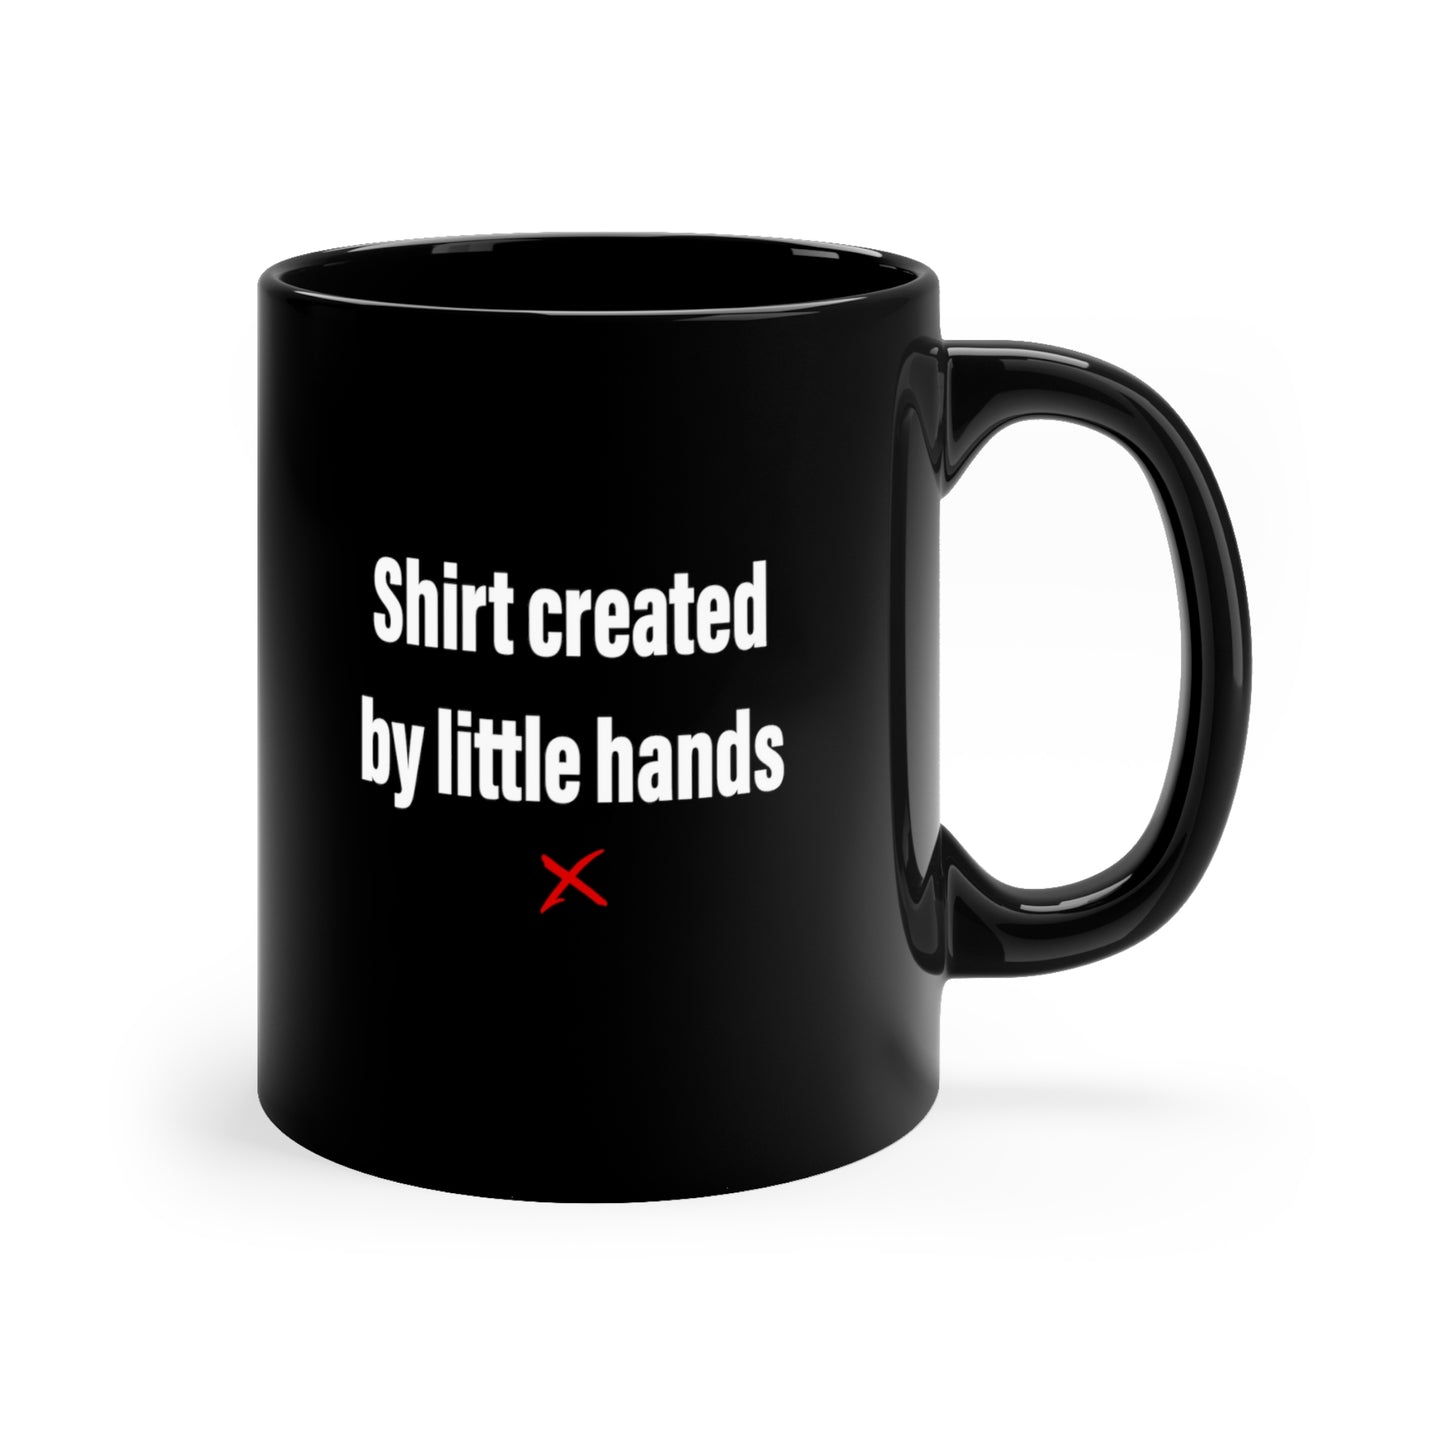 Shirt created by little hands - Mug